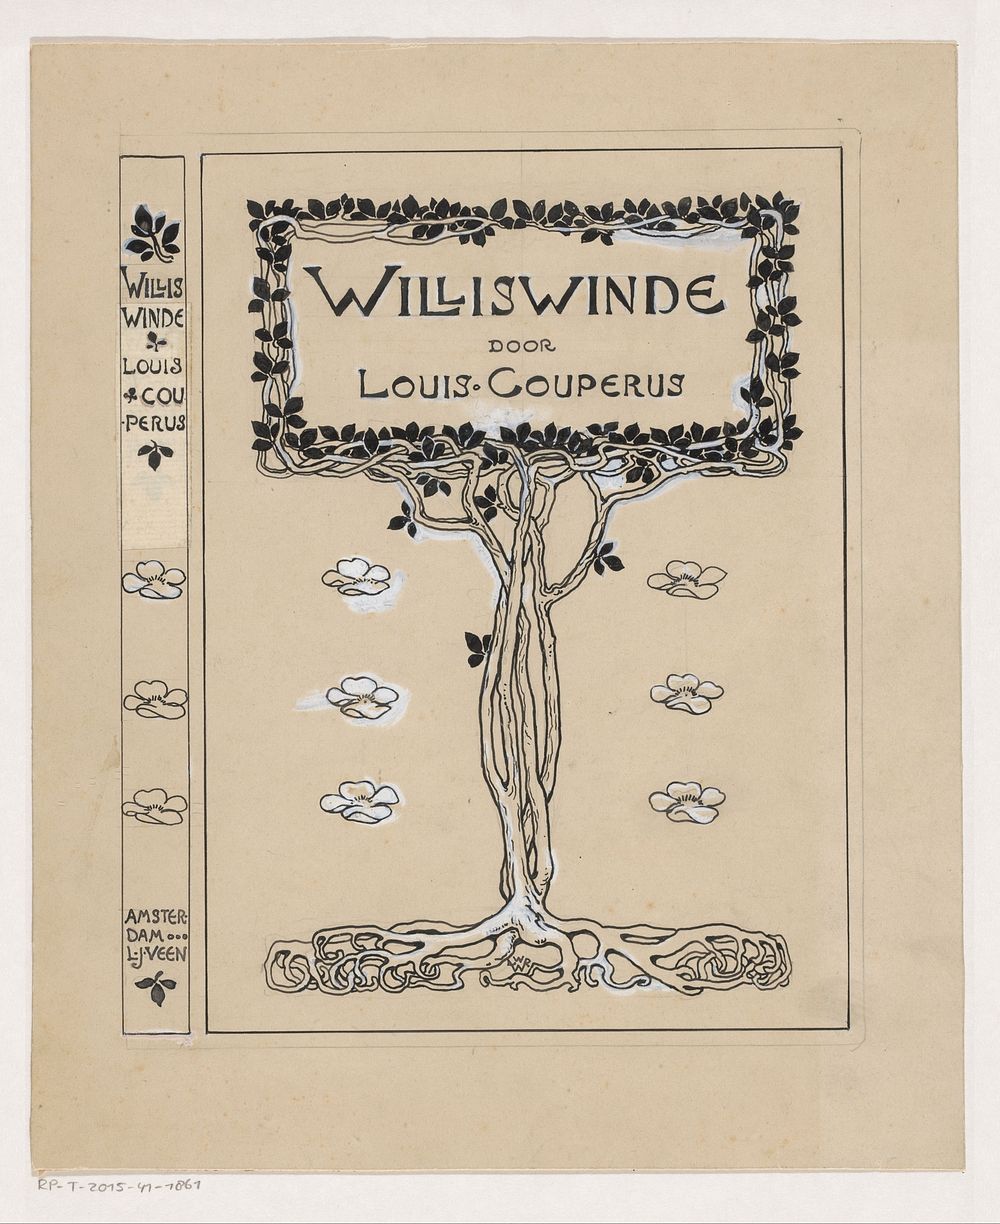 Bandontwerp voor: Louis Couperus, Williswinde, 1895 (in or before 1895) by Willem Wenckebach